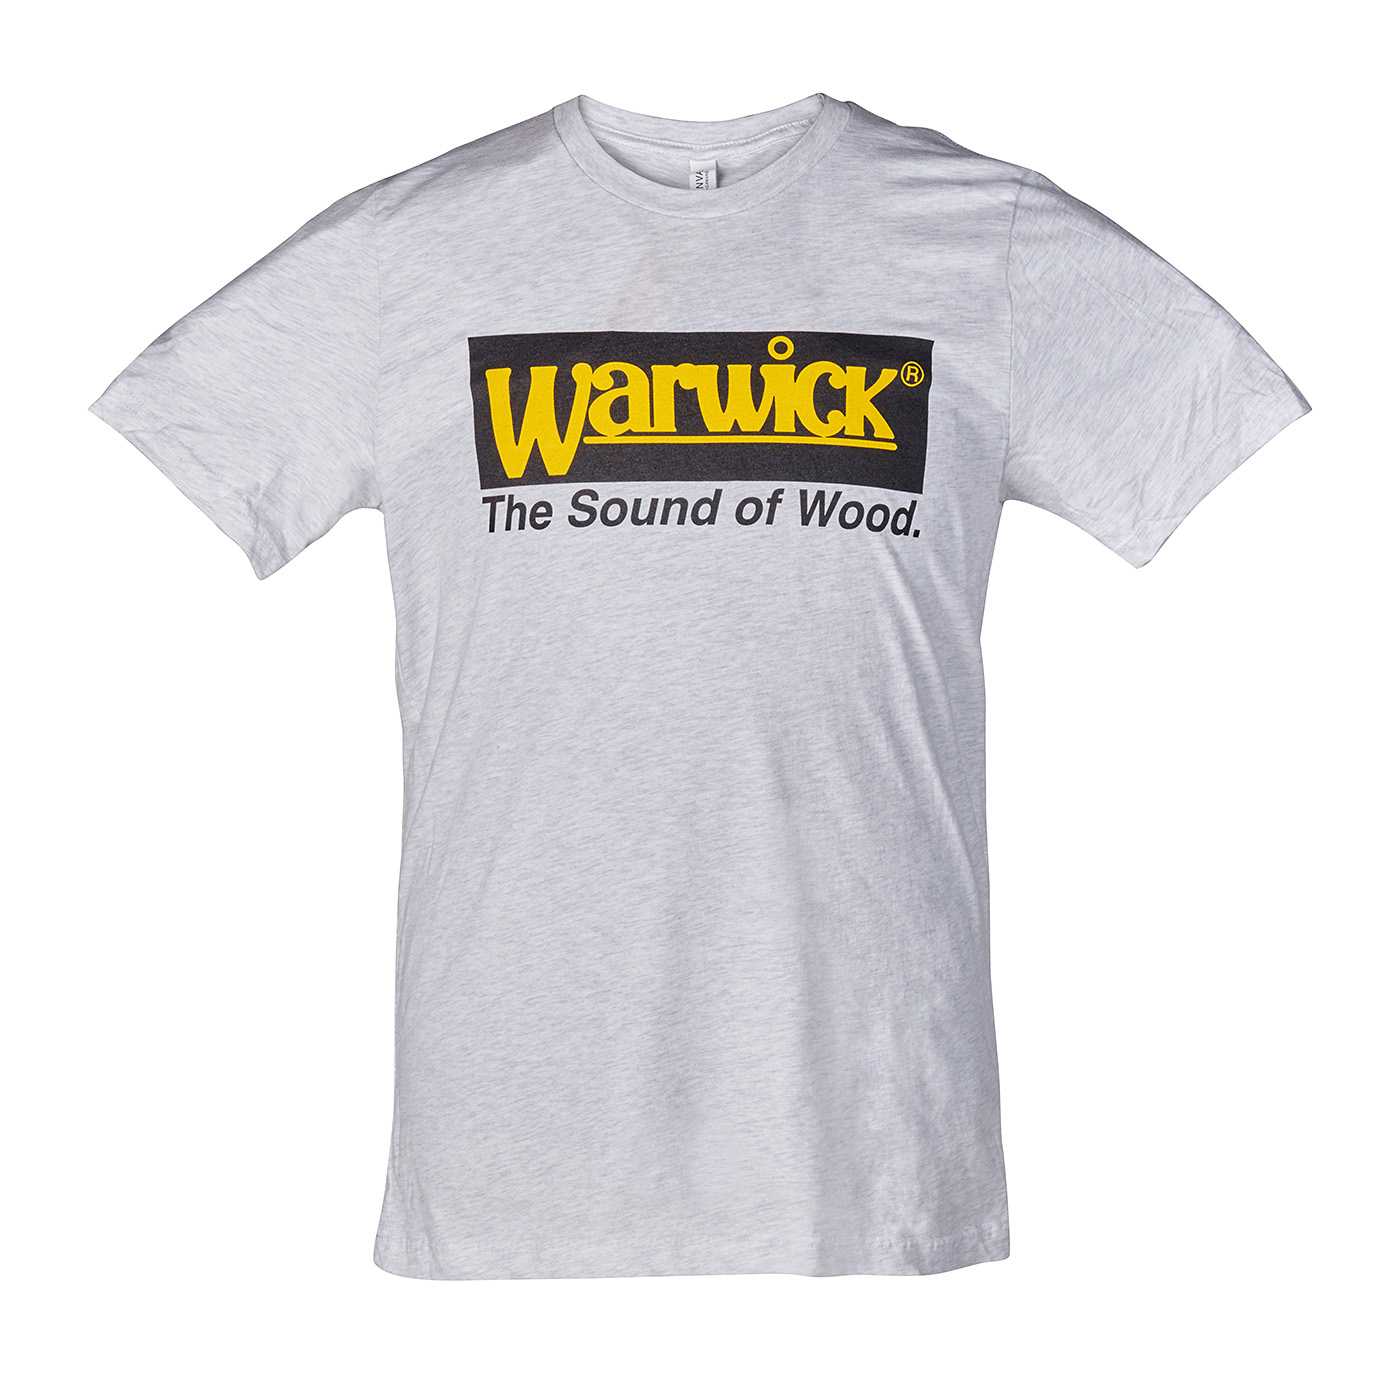 Warwick Promo - Vintage Logo T-Shirt, Gray - Size S